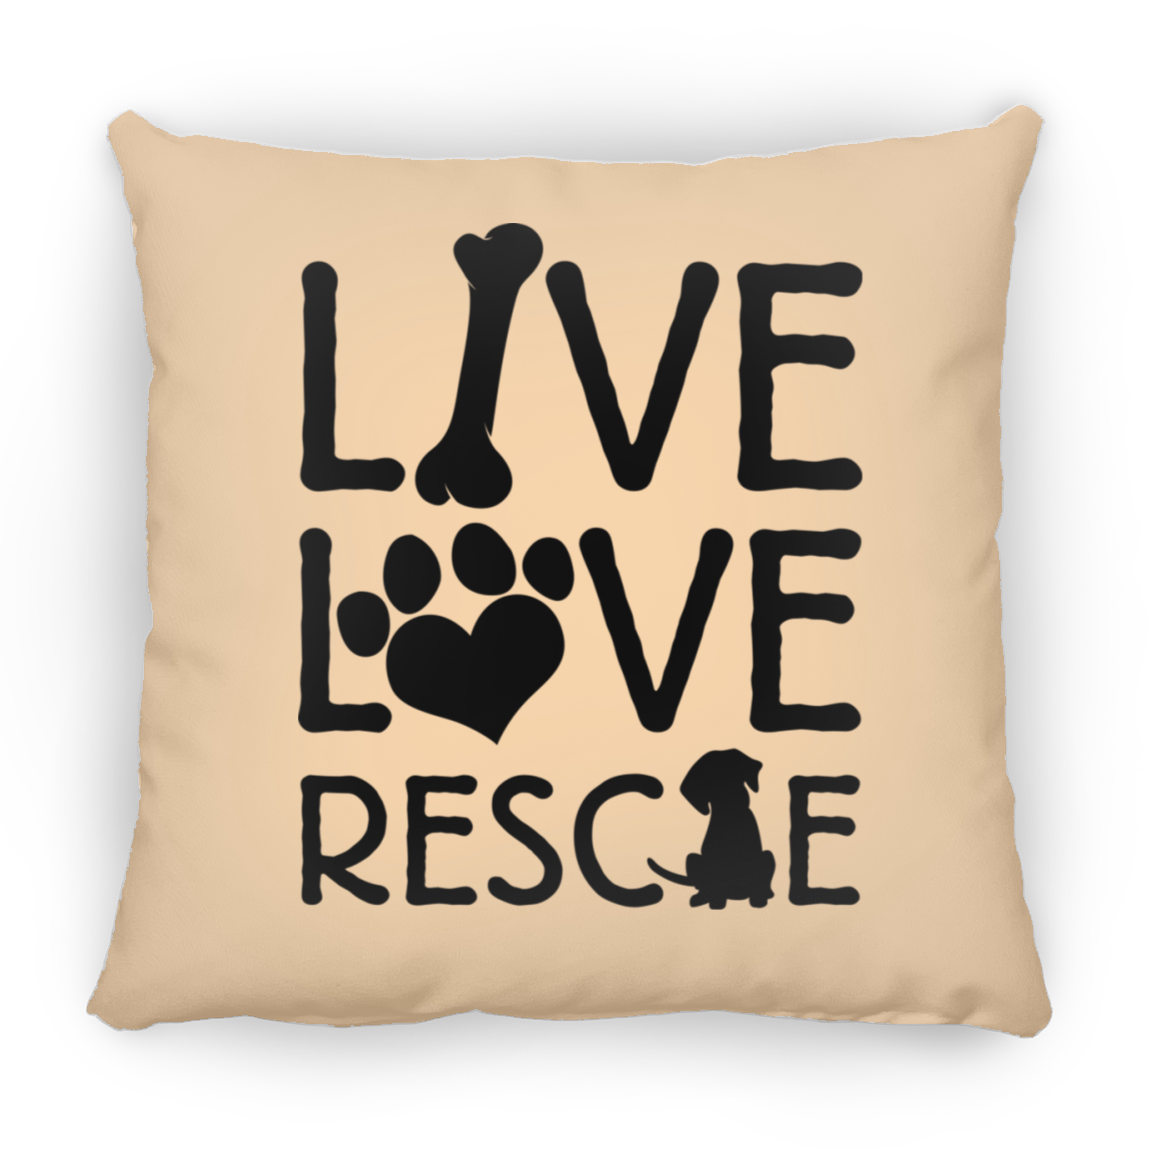 Live Love Rescue - Medium Square Pillow